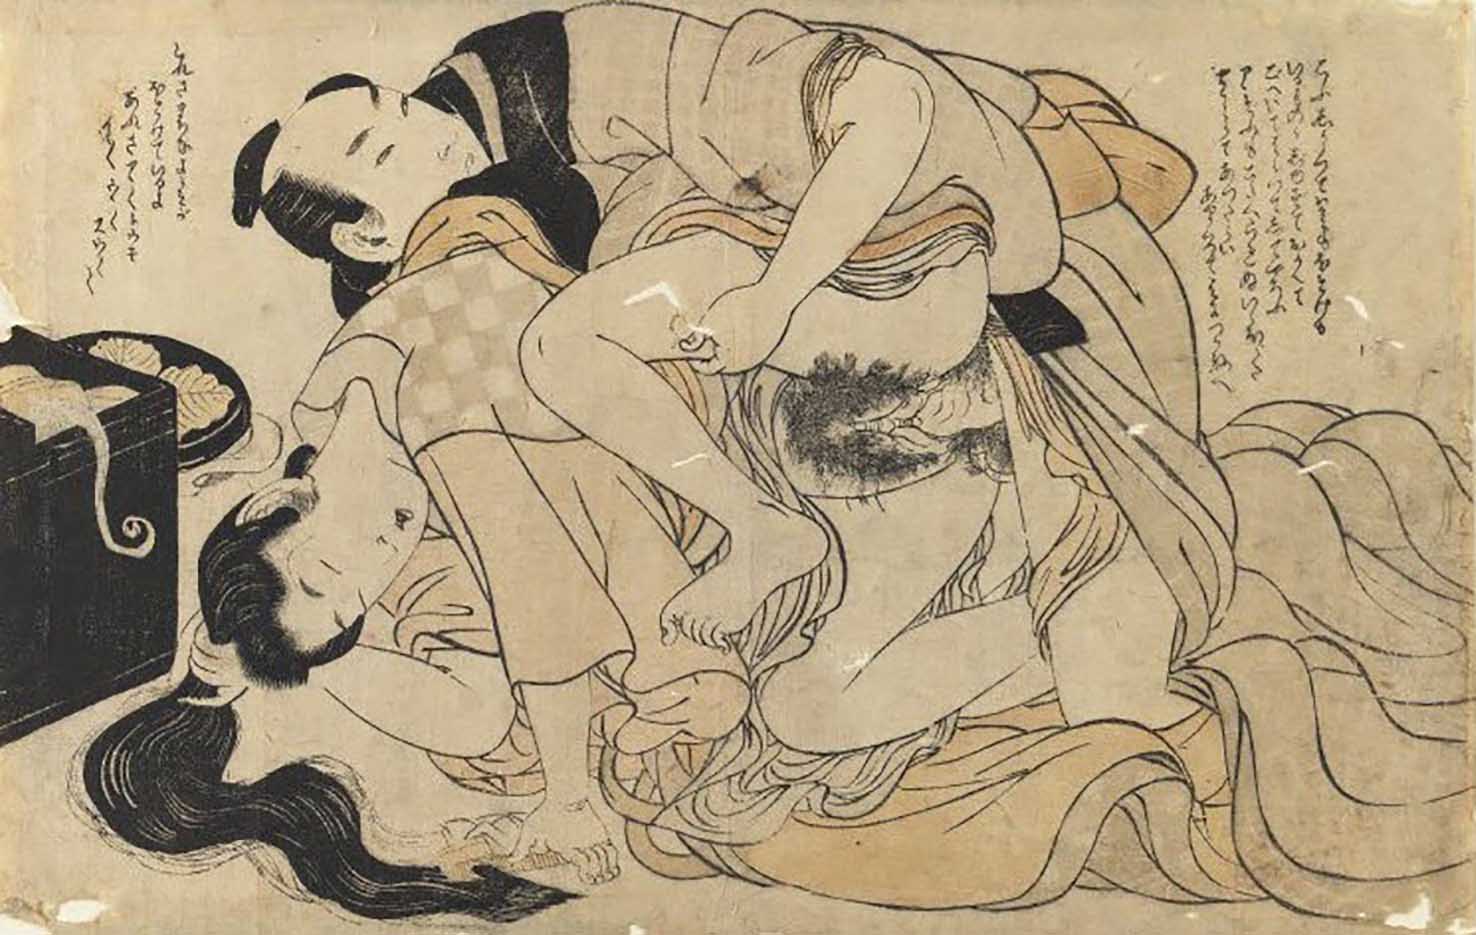 Китагава Утамаро (Kitagawa Utamaro) “Amorous Couple (2)“